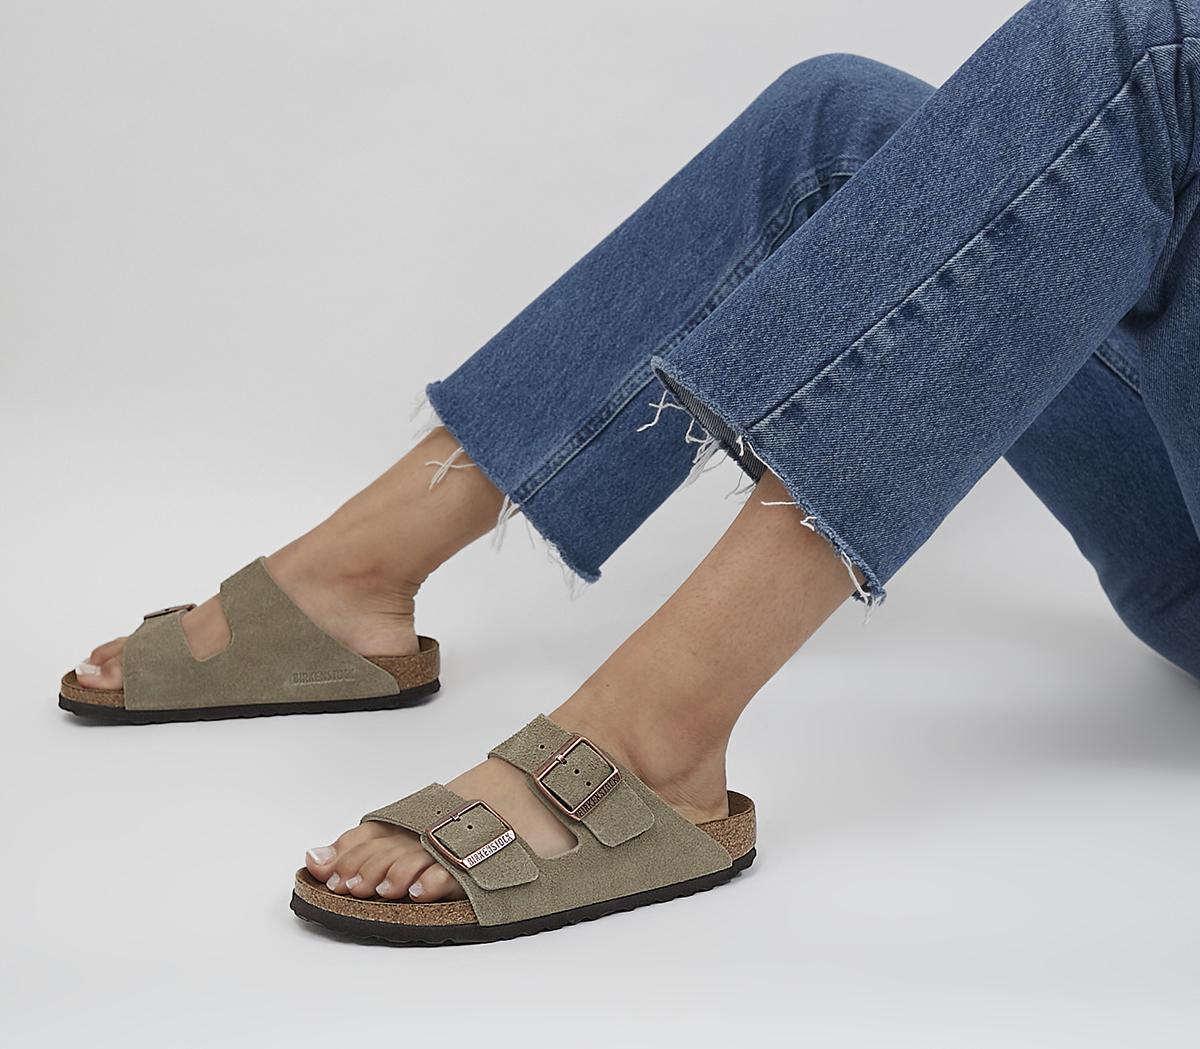 Birkenstock Arizona Two-Strap Comfort Sandal